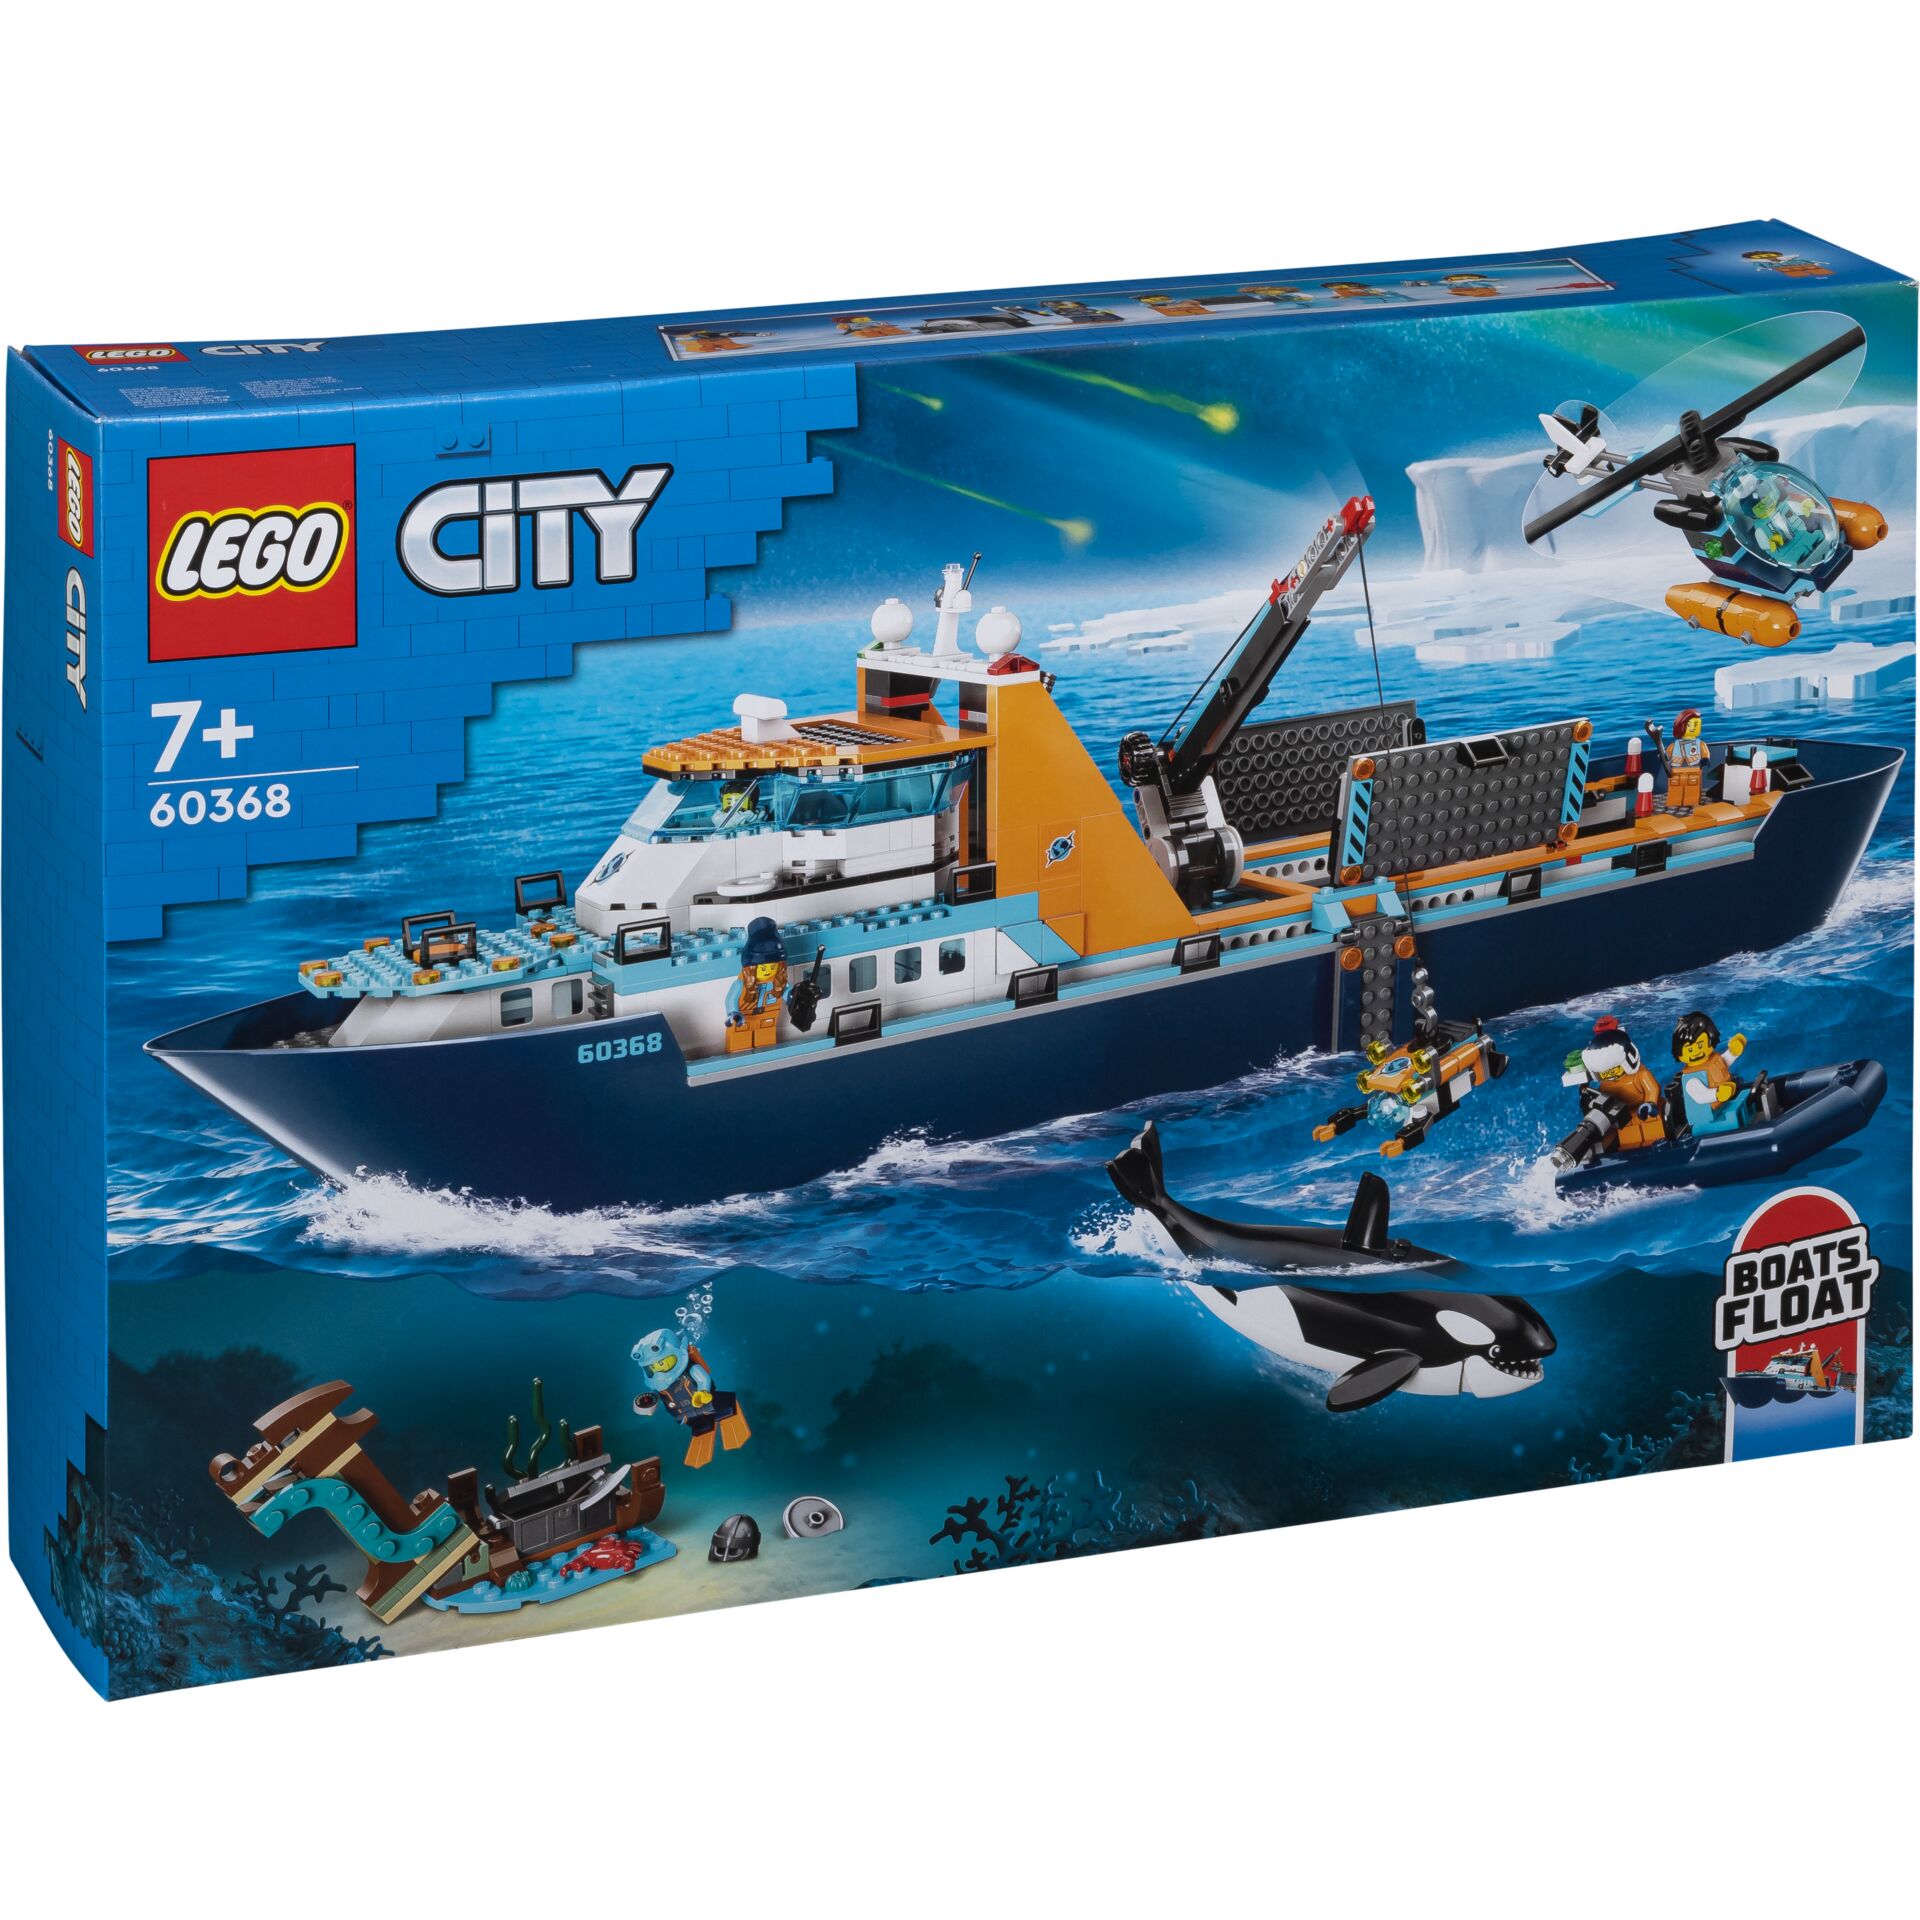 LEGO City 60368 Esploratore artico